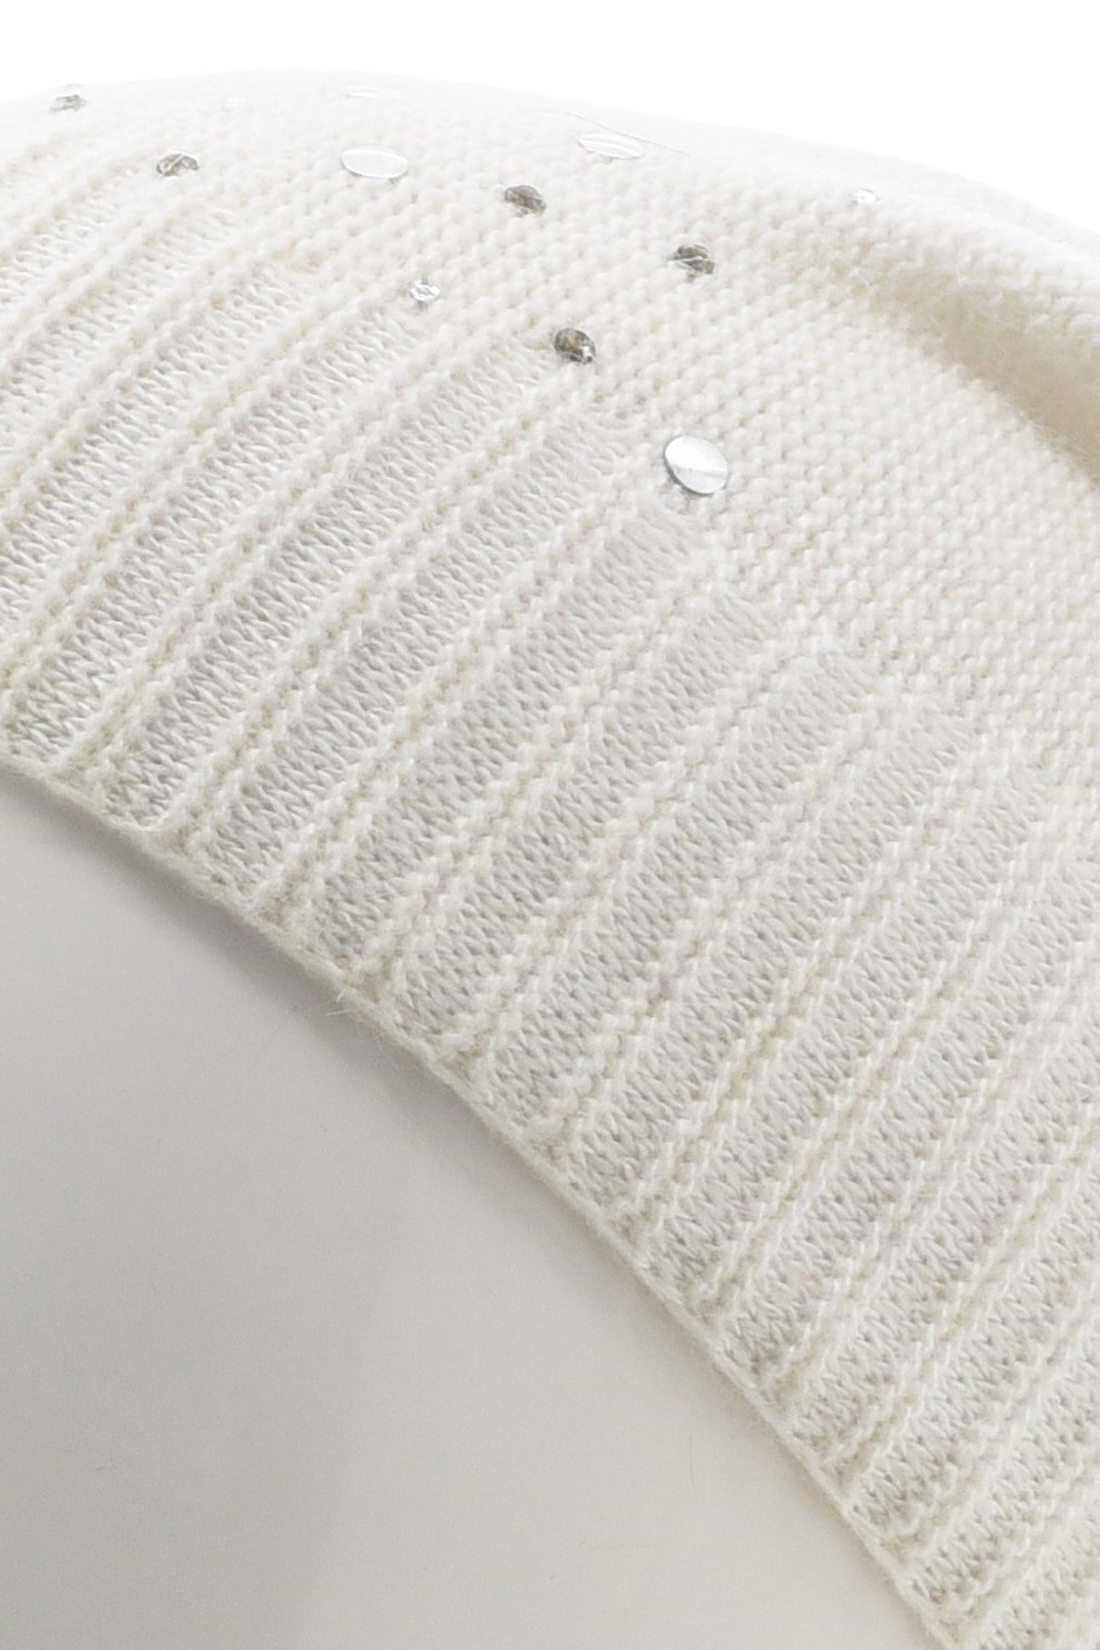 Полушерстяная шапка со стразами (арт. baon B348576), размер Б/р 56, цвет белый Полушерстяная шапка со стразами (арт. baon B348576) - фото 7